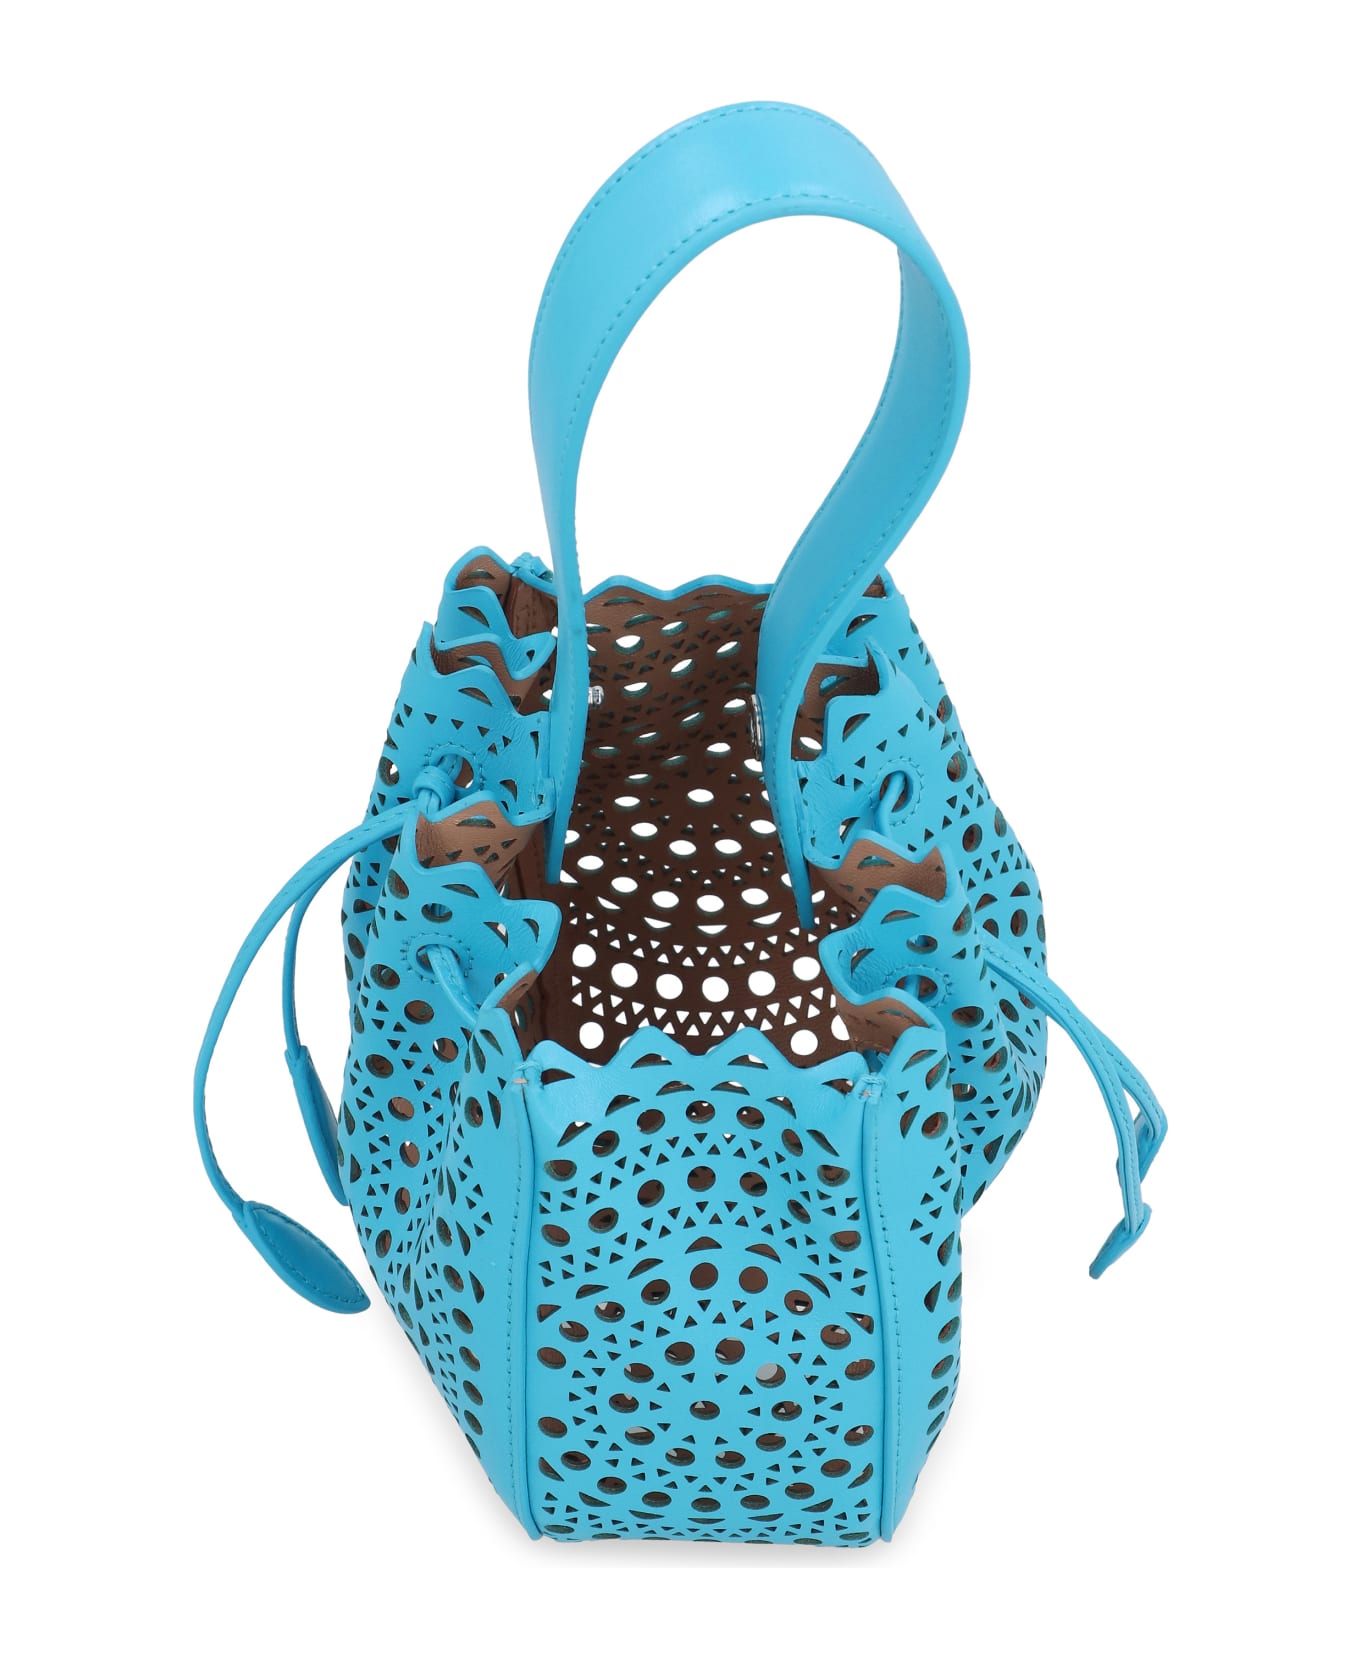 Alaia Rose Marie Leather Handbag - blue